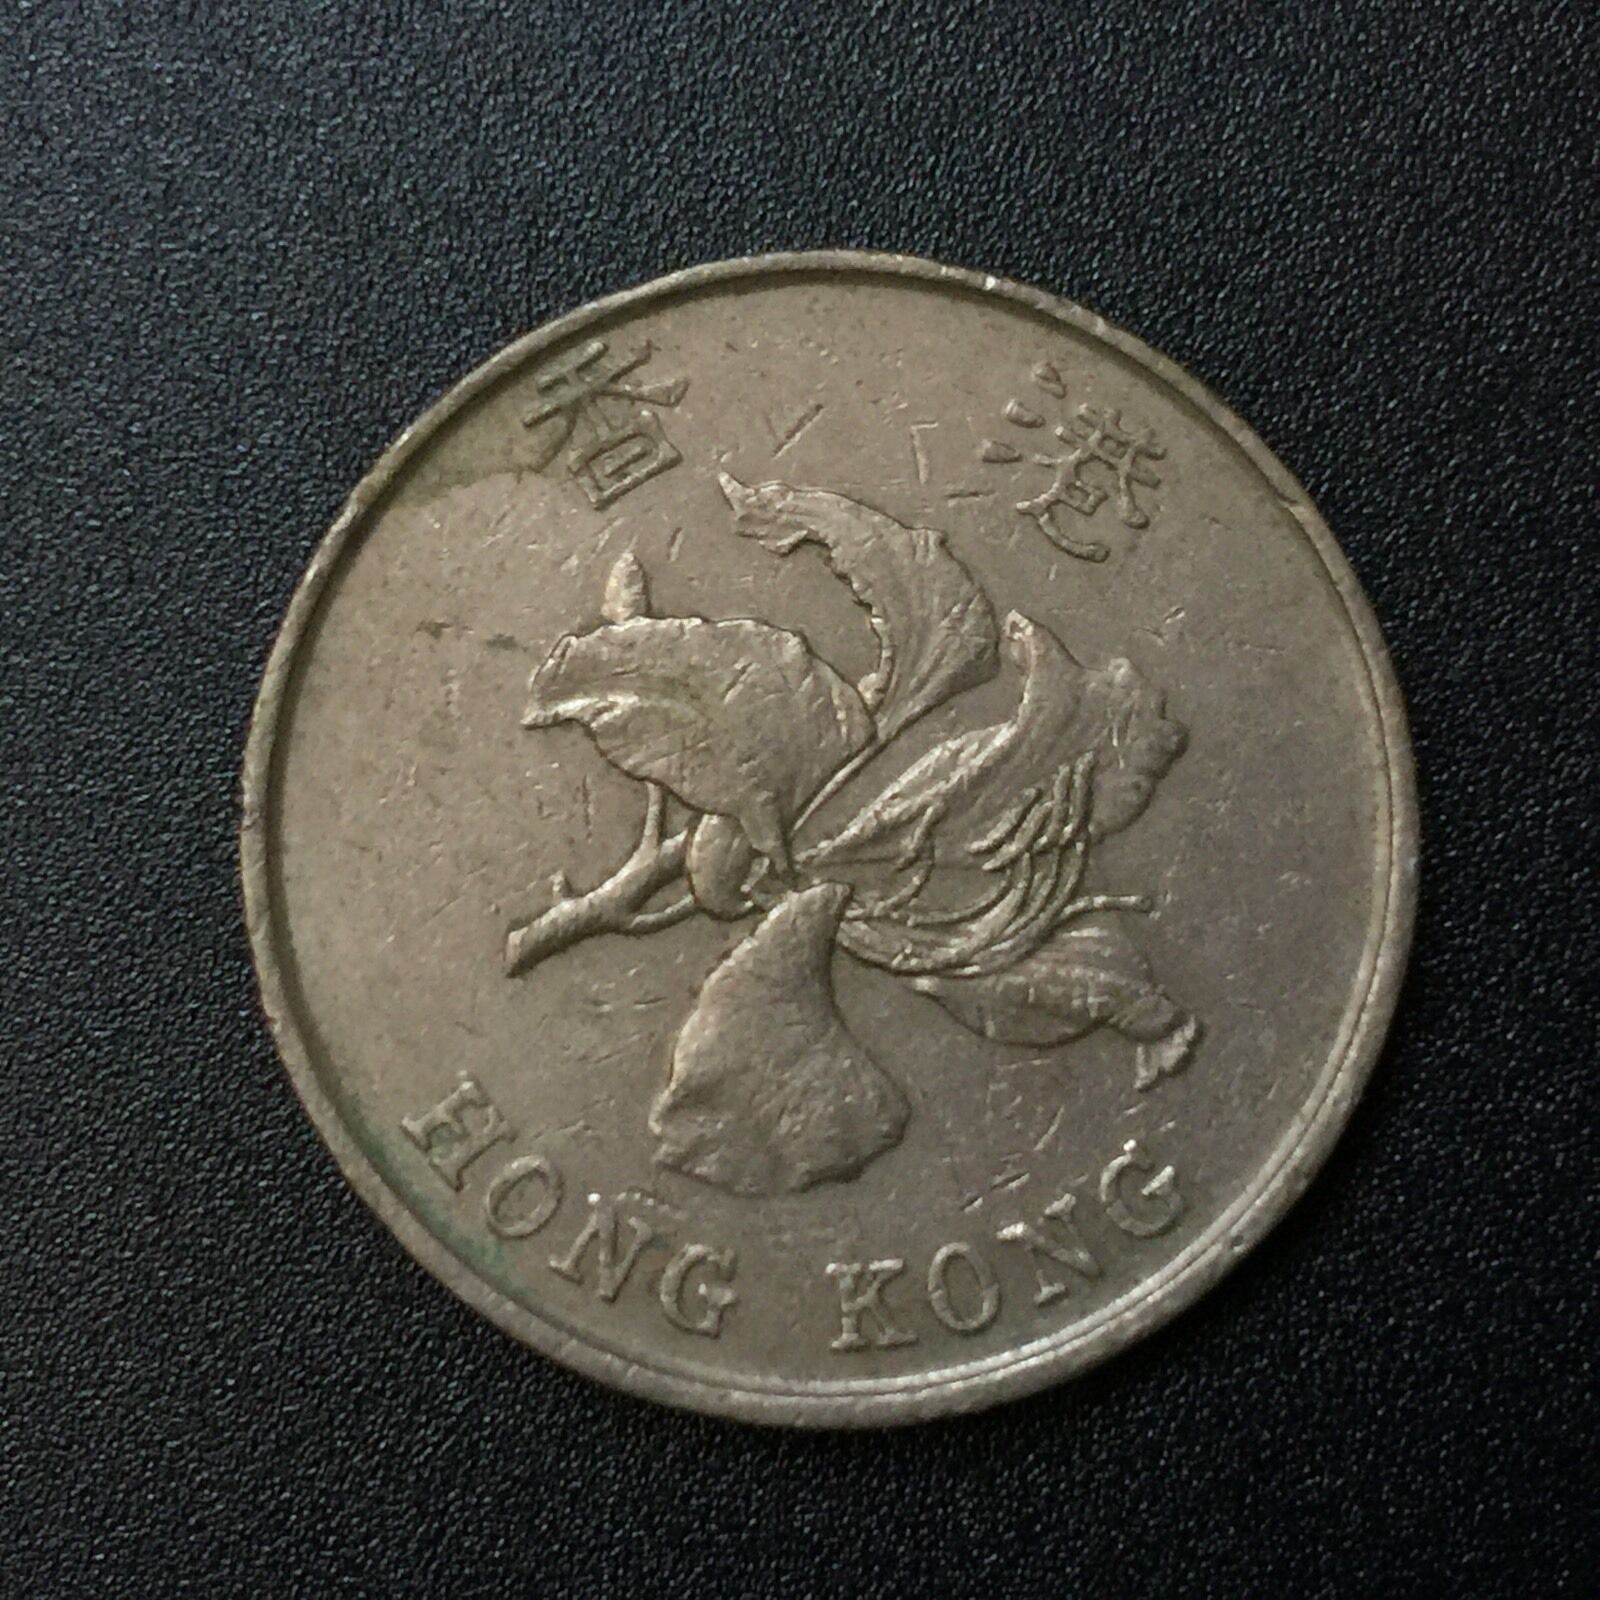 1993 Hong Kong 5 Dollar Coin